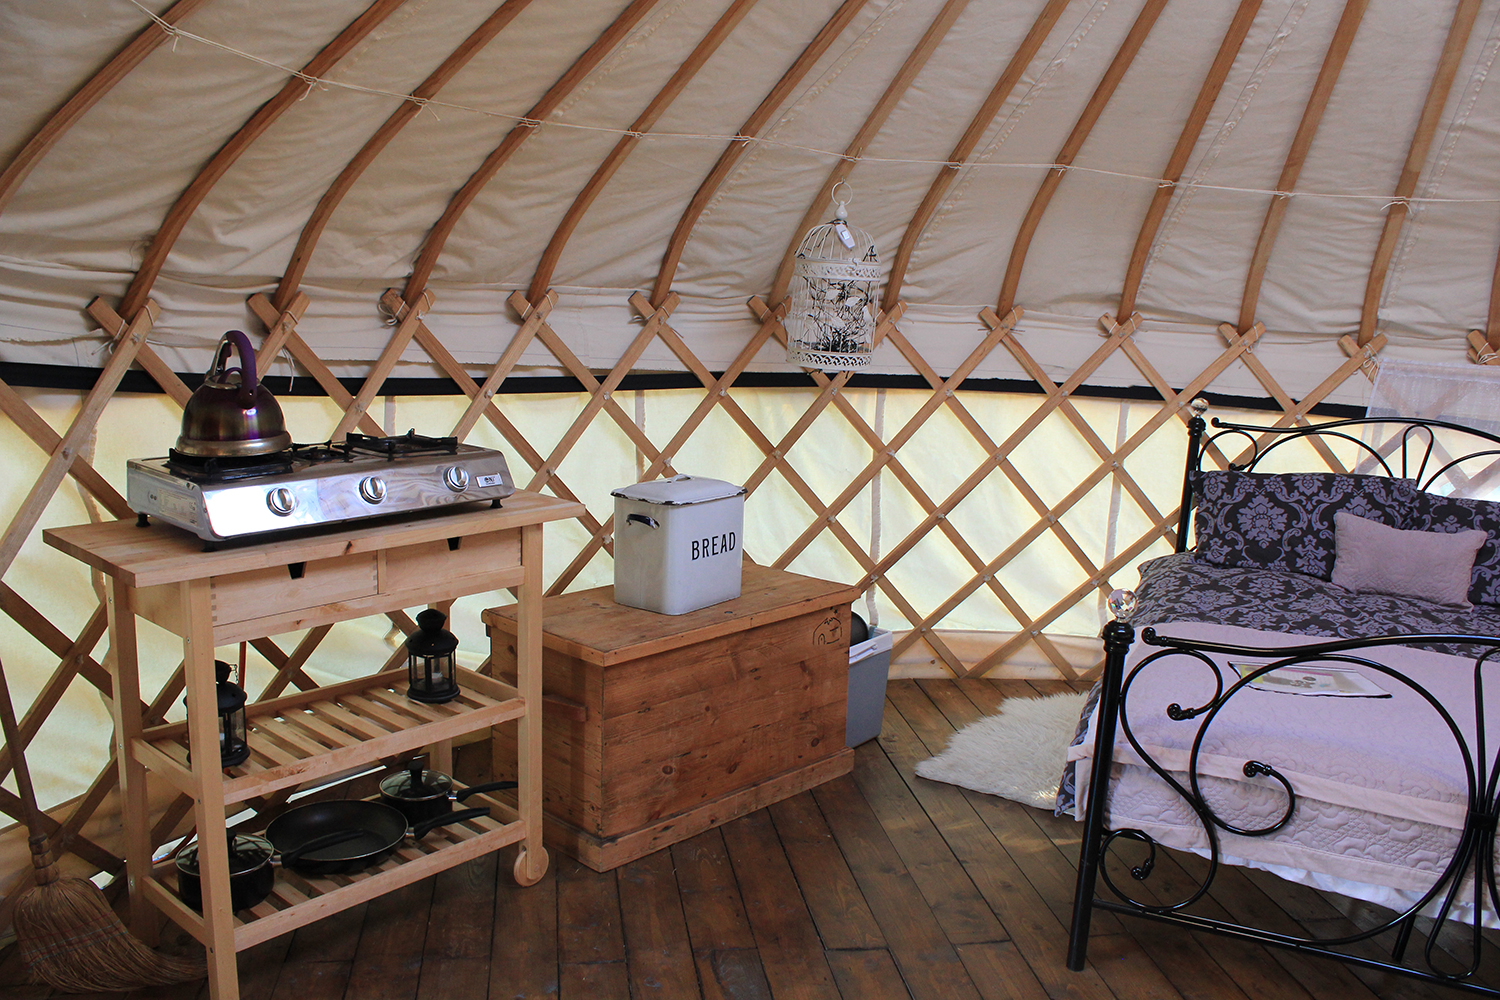 Inside the Red Kite Yurt at Cledan Valley Glamping